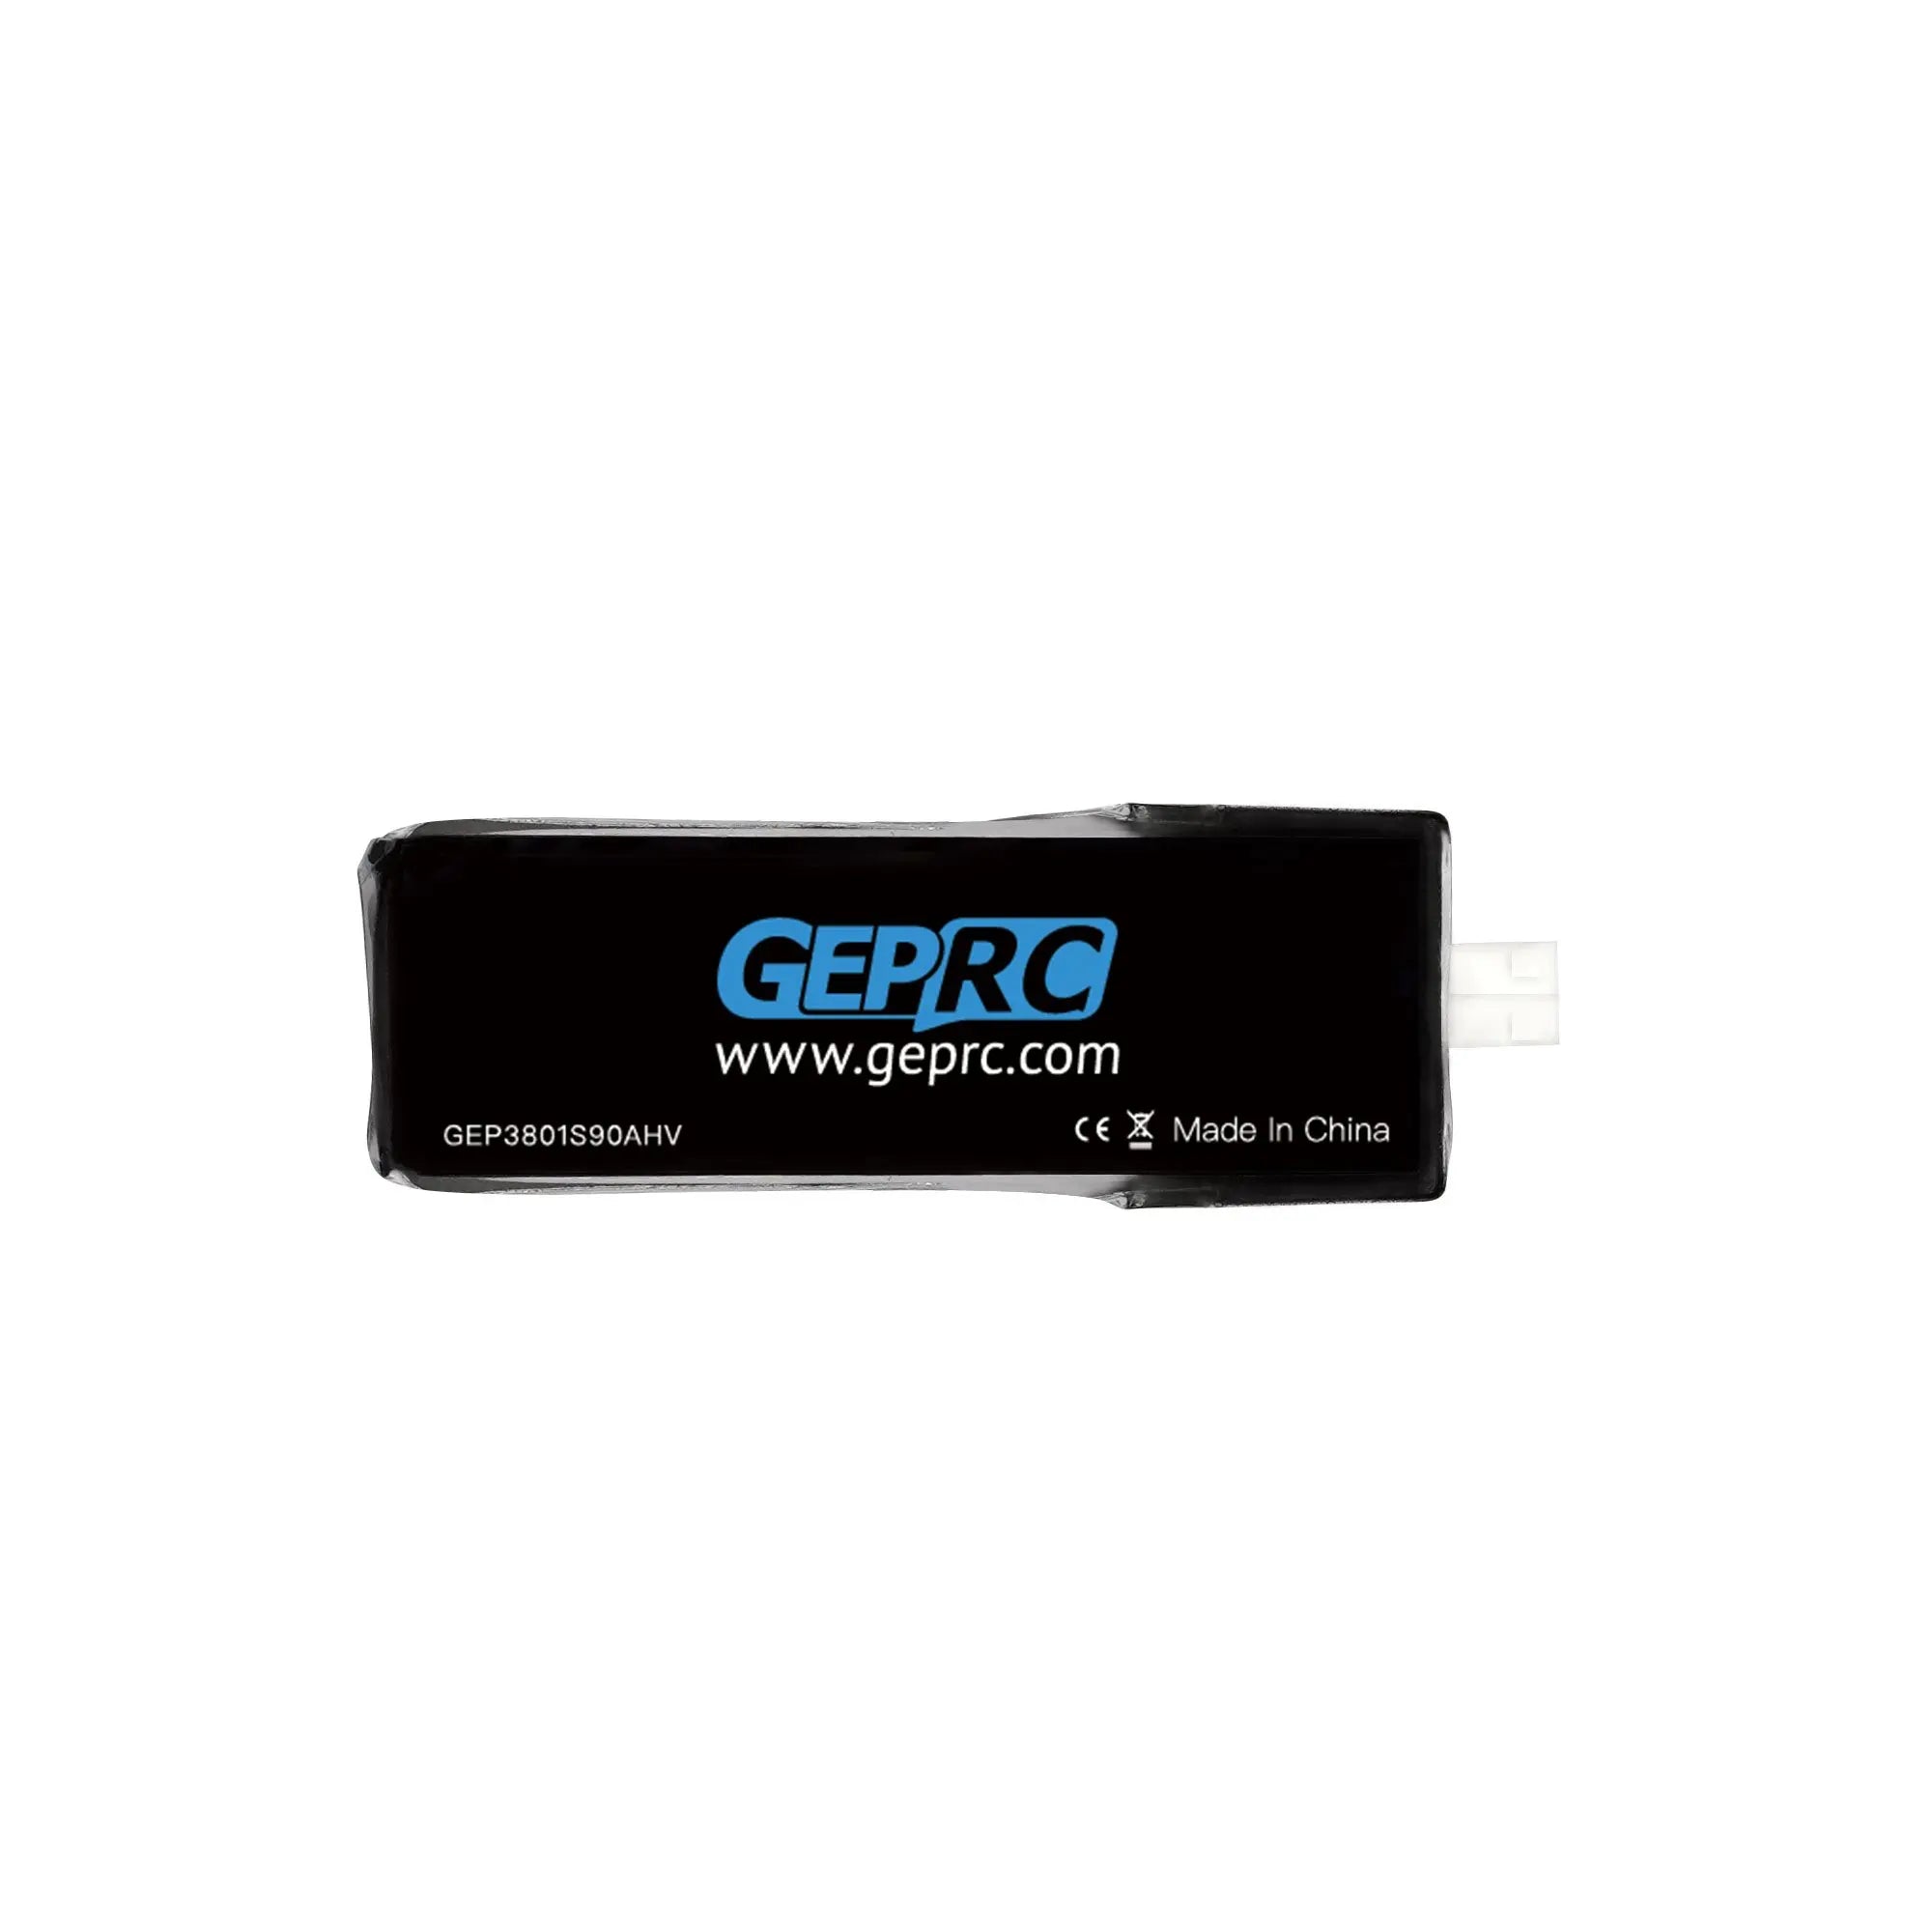 GEPRC 1S 380mAh 90C Battery, GEPRC www.geprc.com GEP3801S9OAH